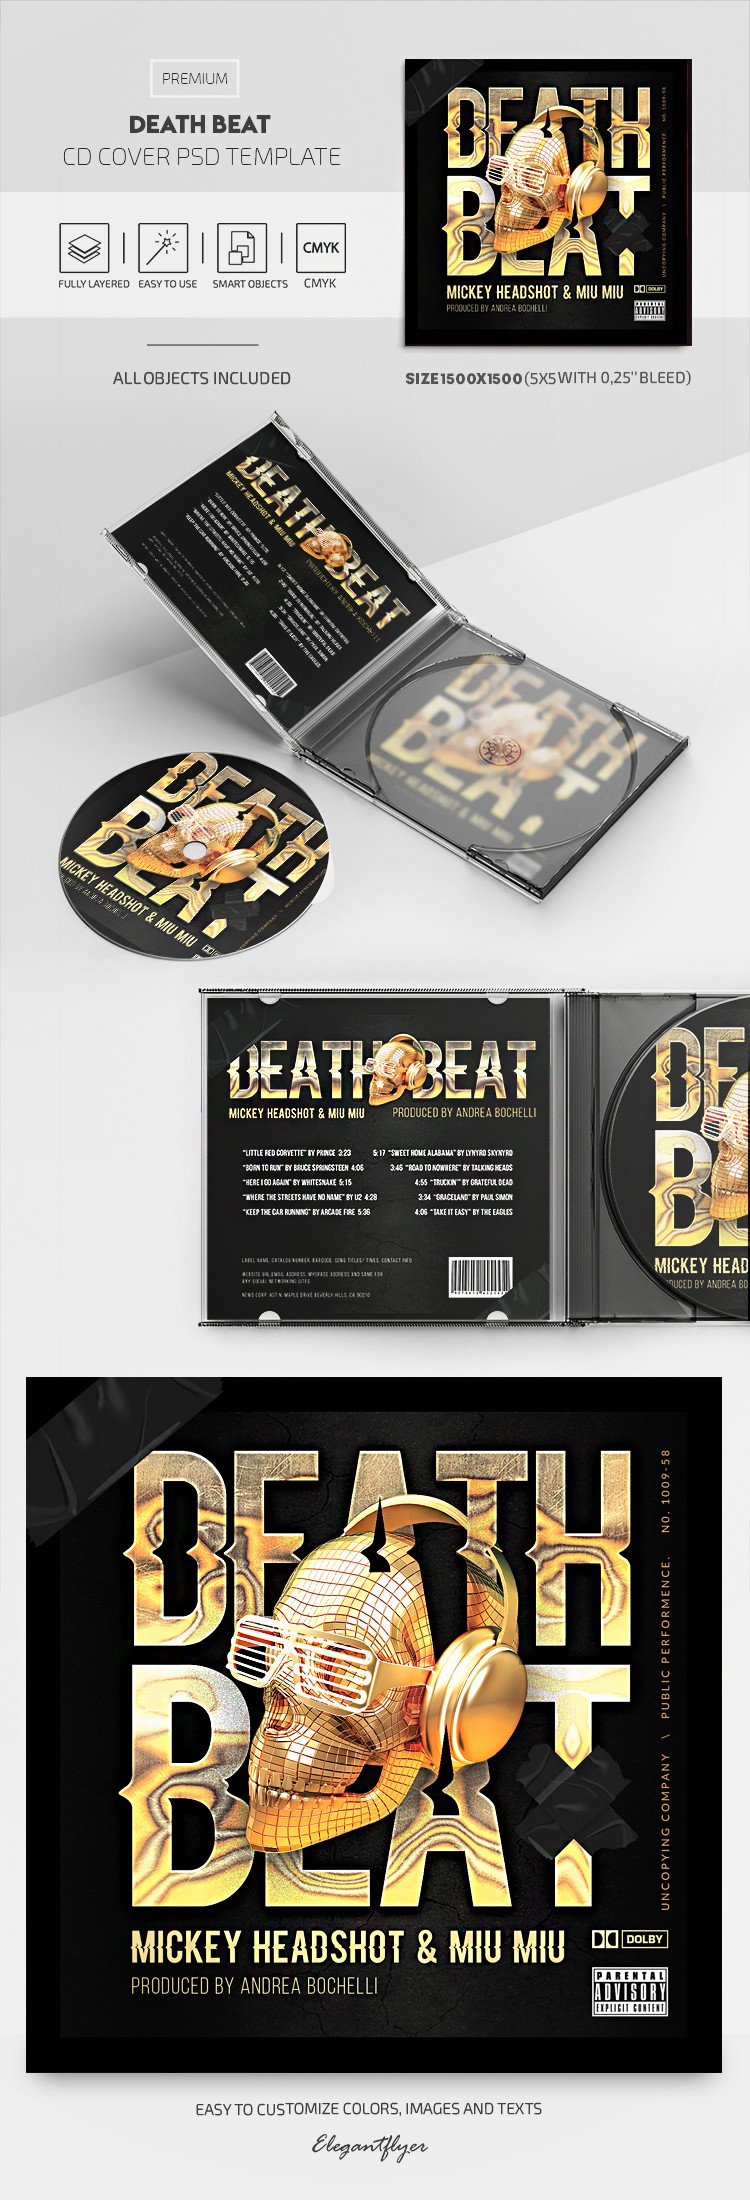 Copertina del CD "Death Beat" by ElegantFlyer